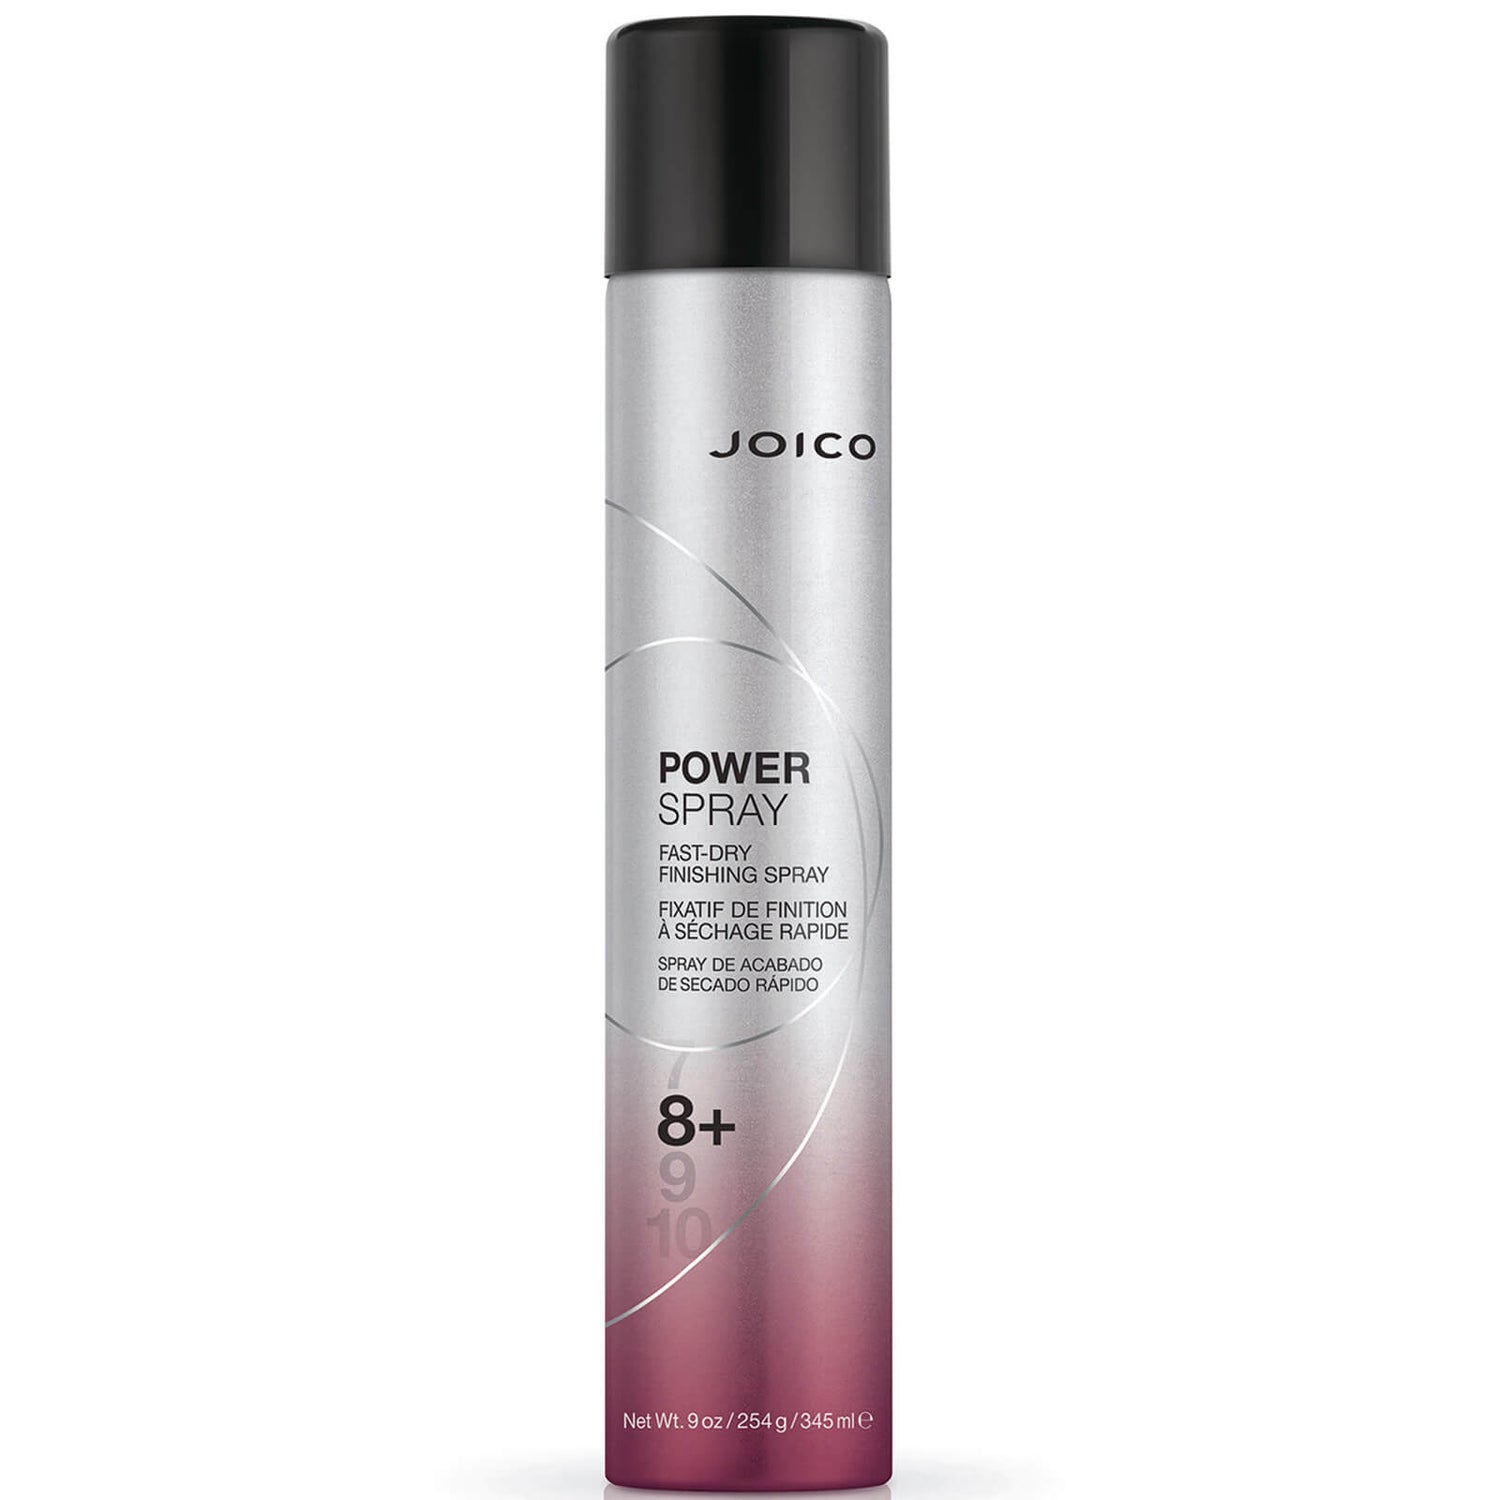 Joico Power spray per capelli tenuta extra-forte (300 ml)